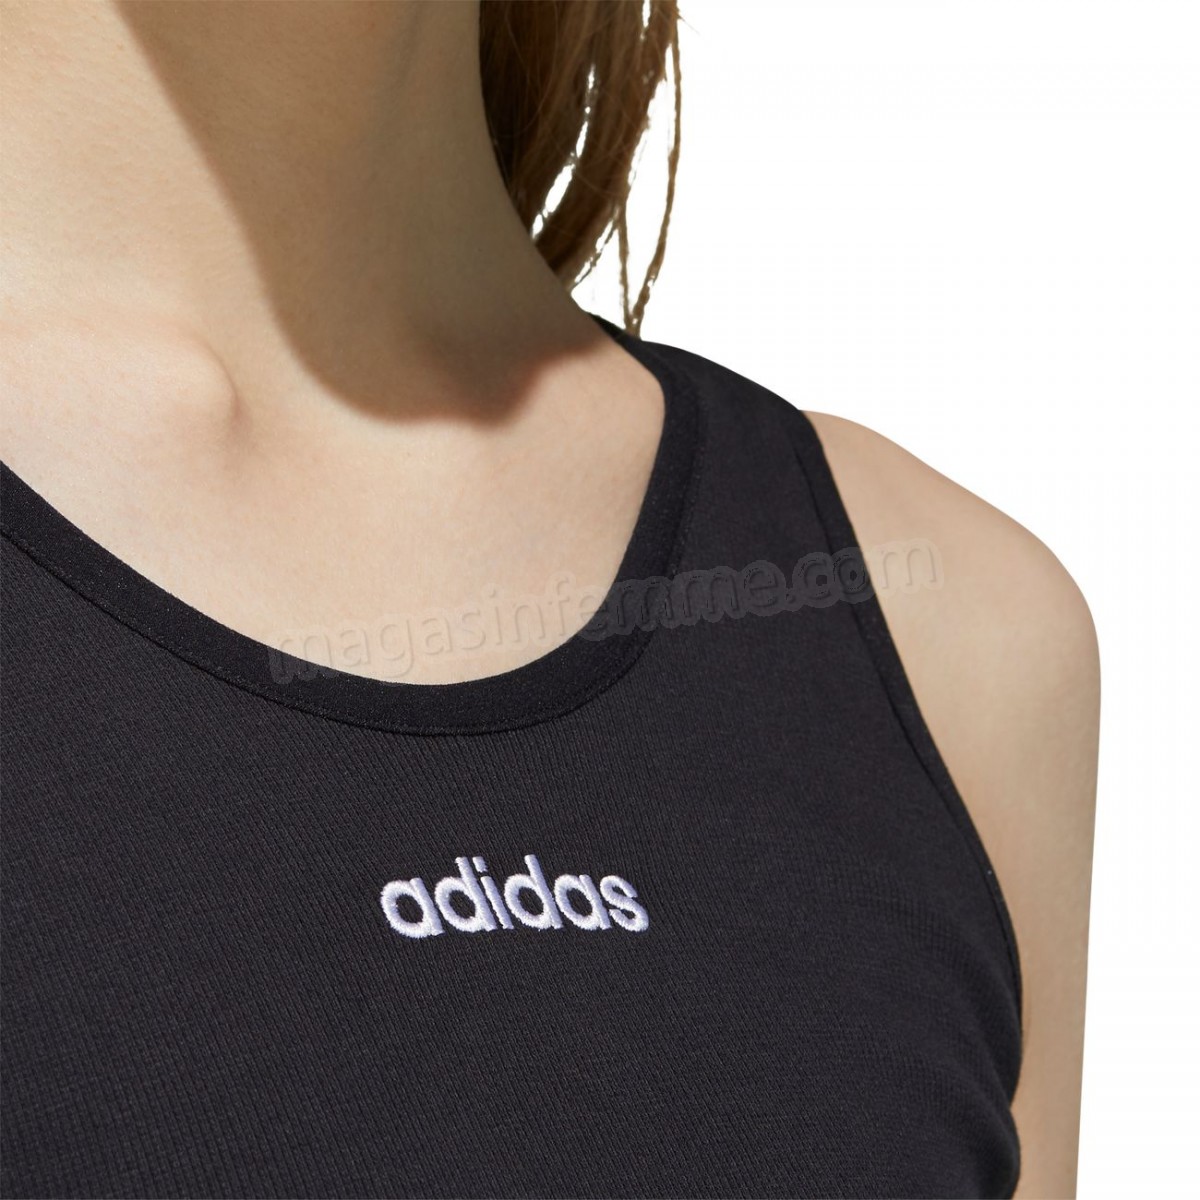 Adidas-Fitness femme ADIDAS Brassière adidas Core Training en solde - -7